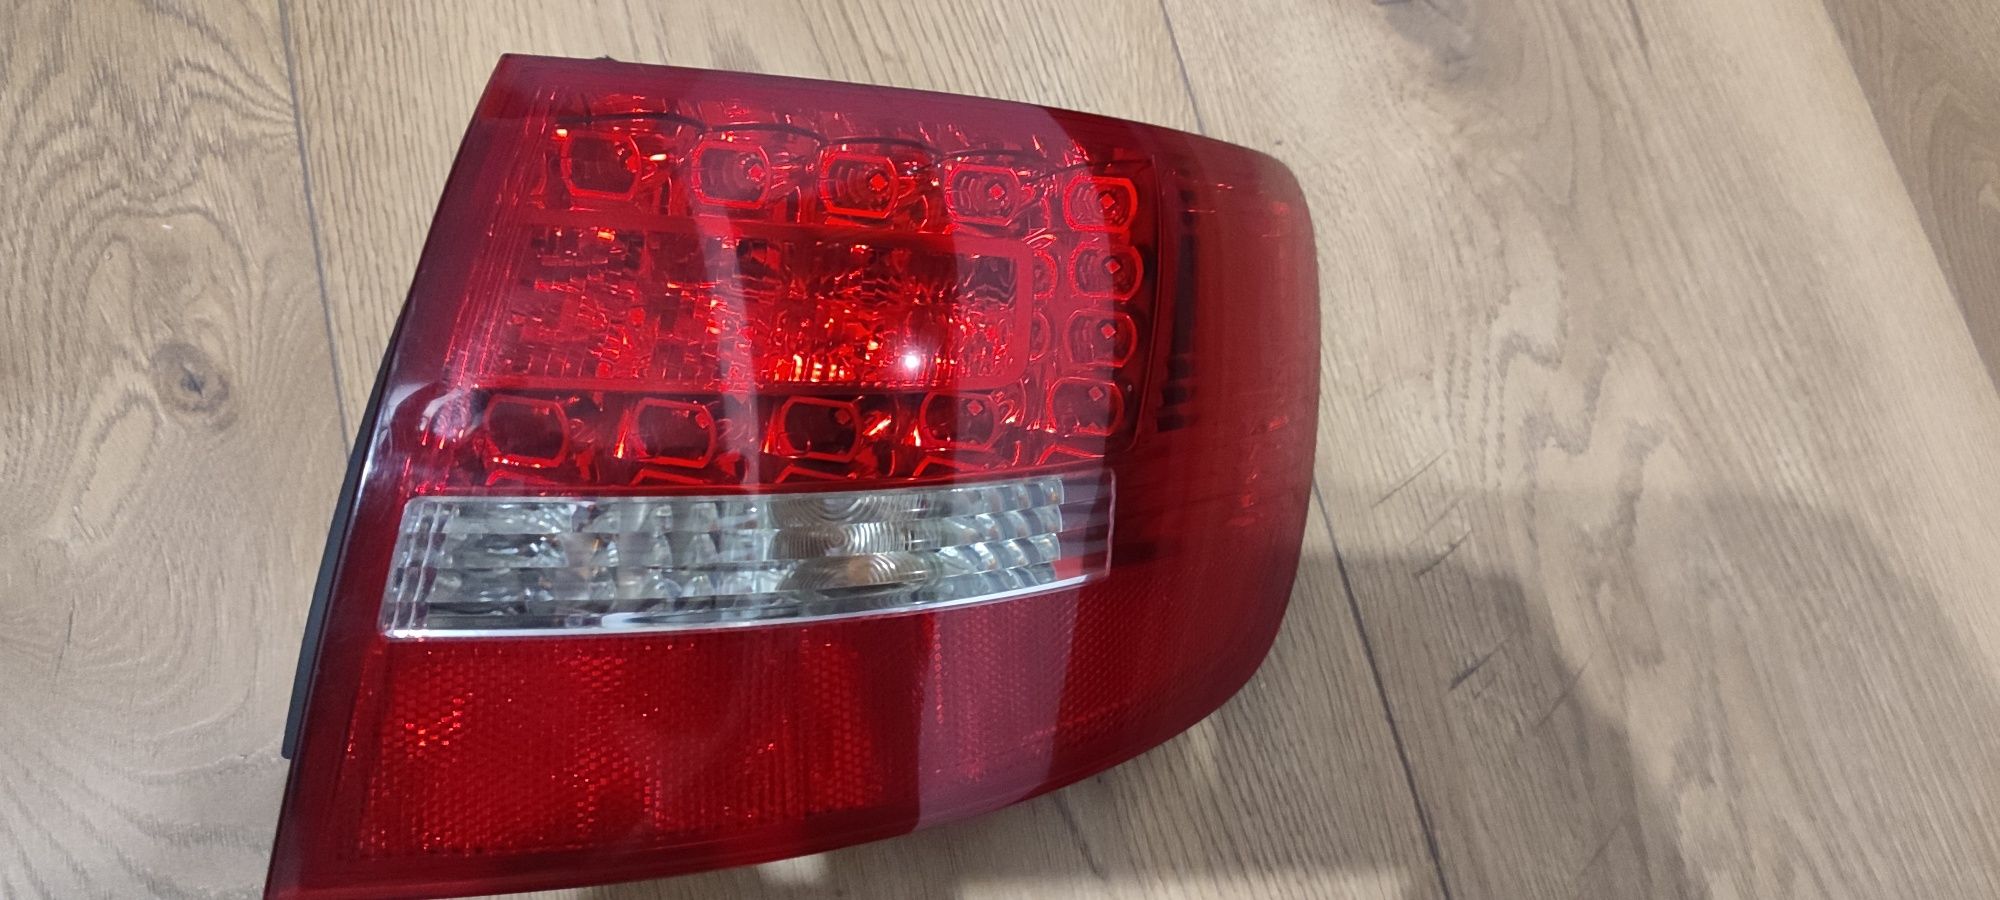 Naprawa regeneracja lamp led Audi A6 C6 A8 D3 klap błotnik A6C6 a8d3